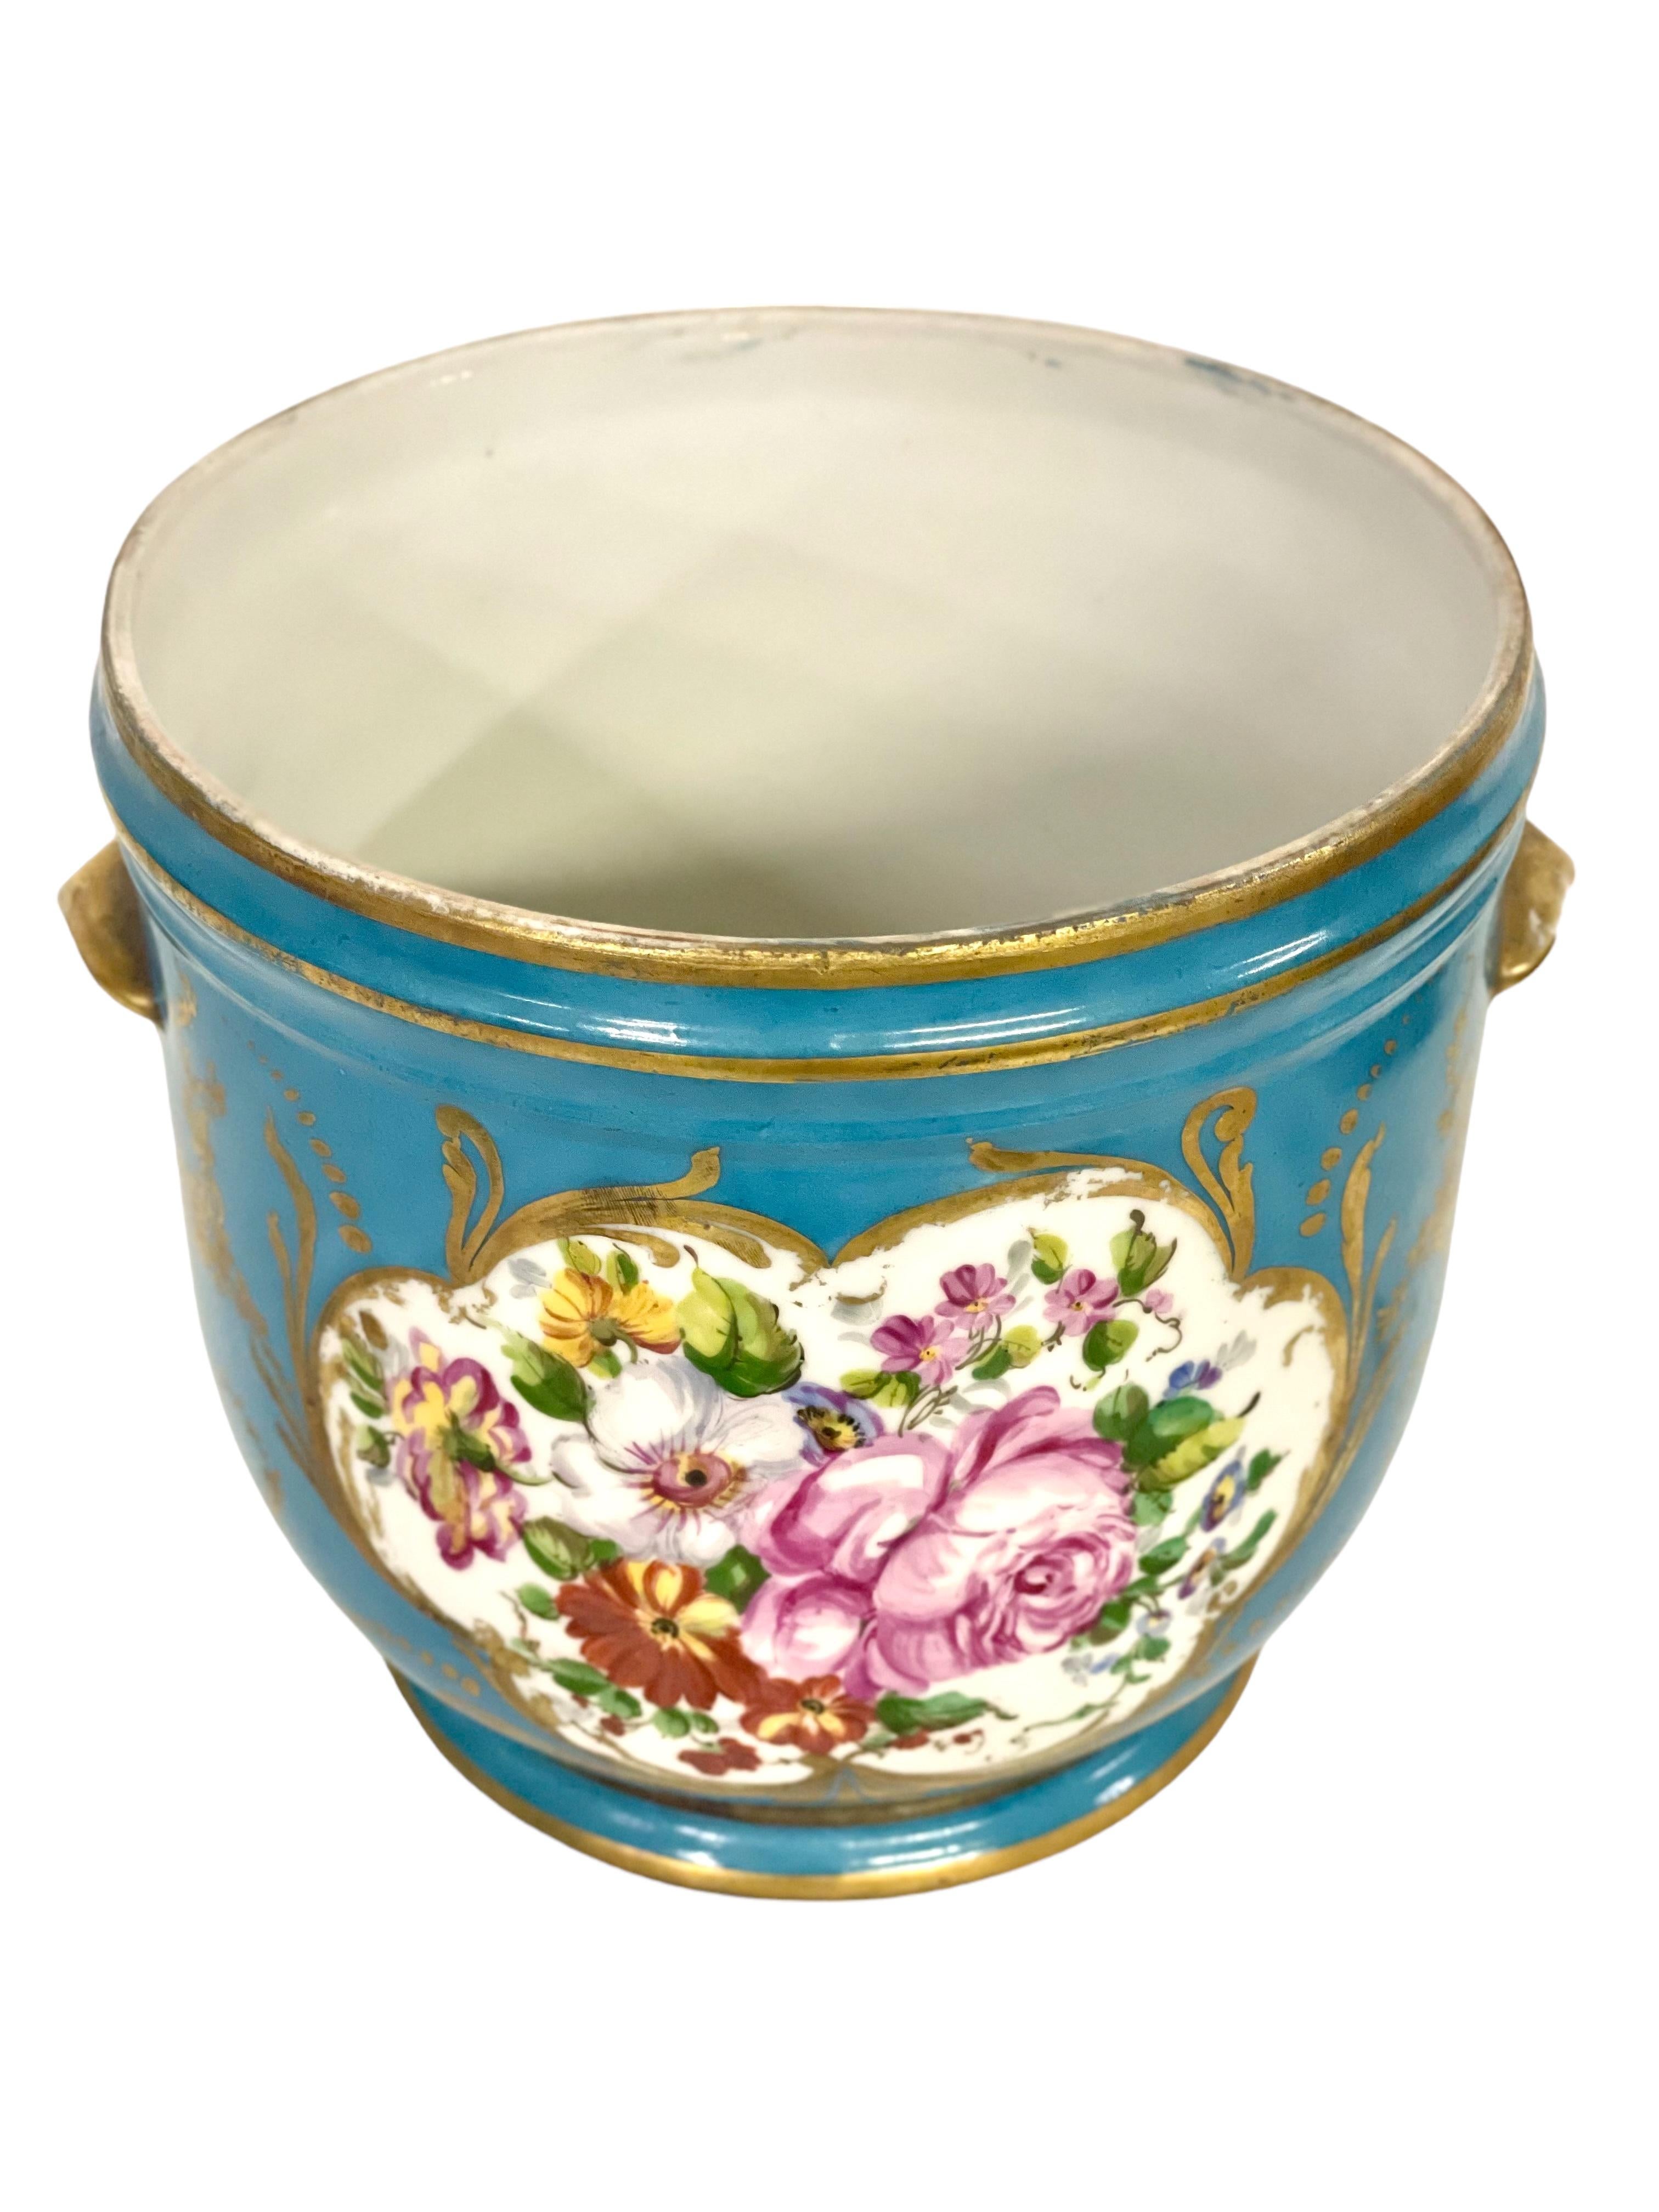 19th Century Limoges Porcelain Cache Pot in a Sèvres Style For Sale 1